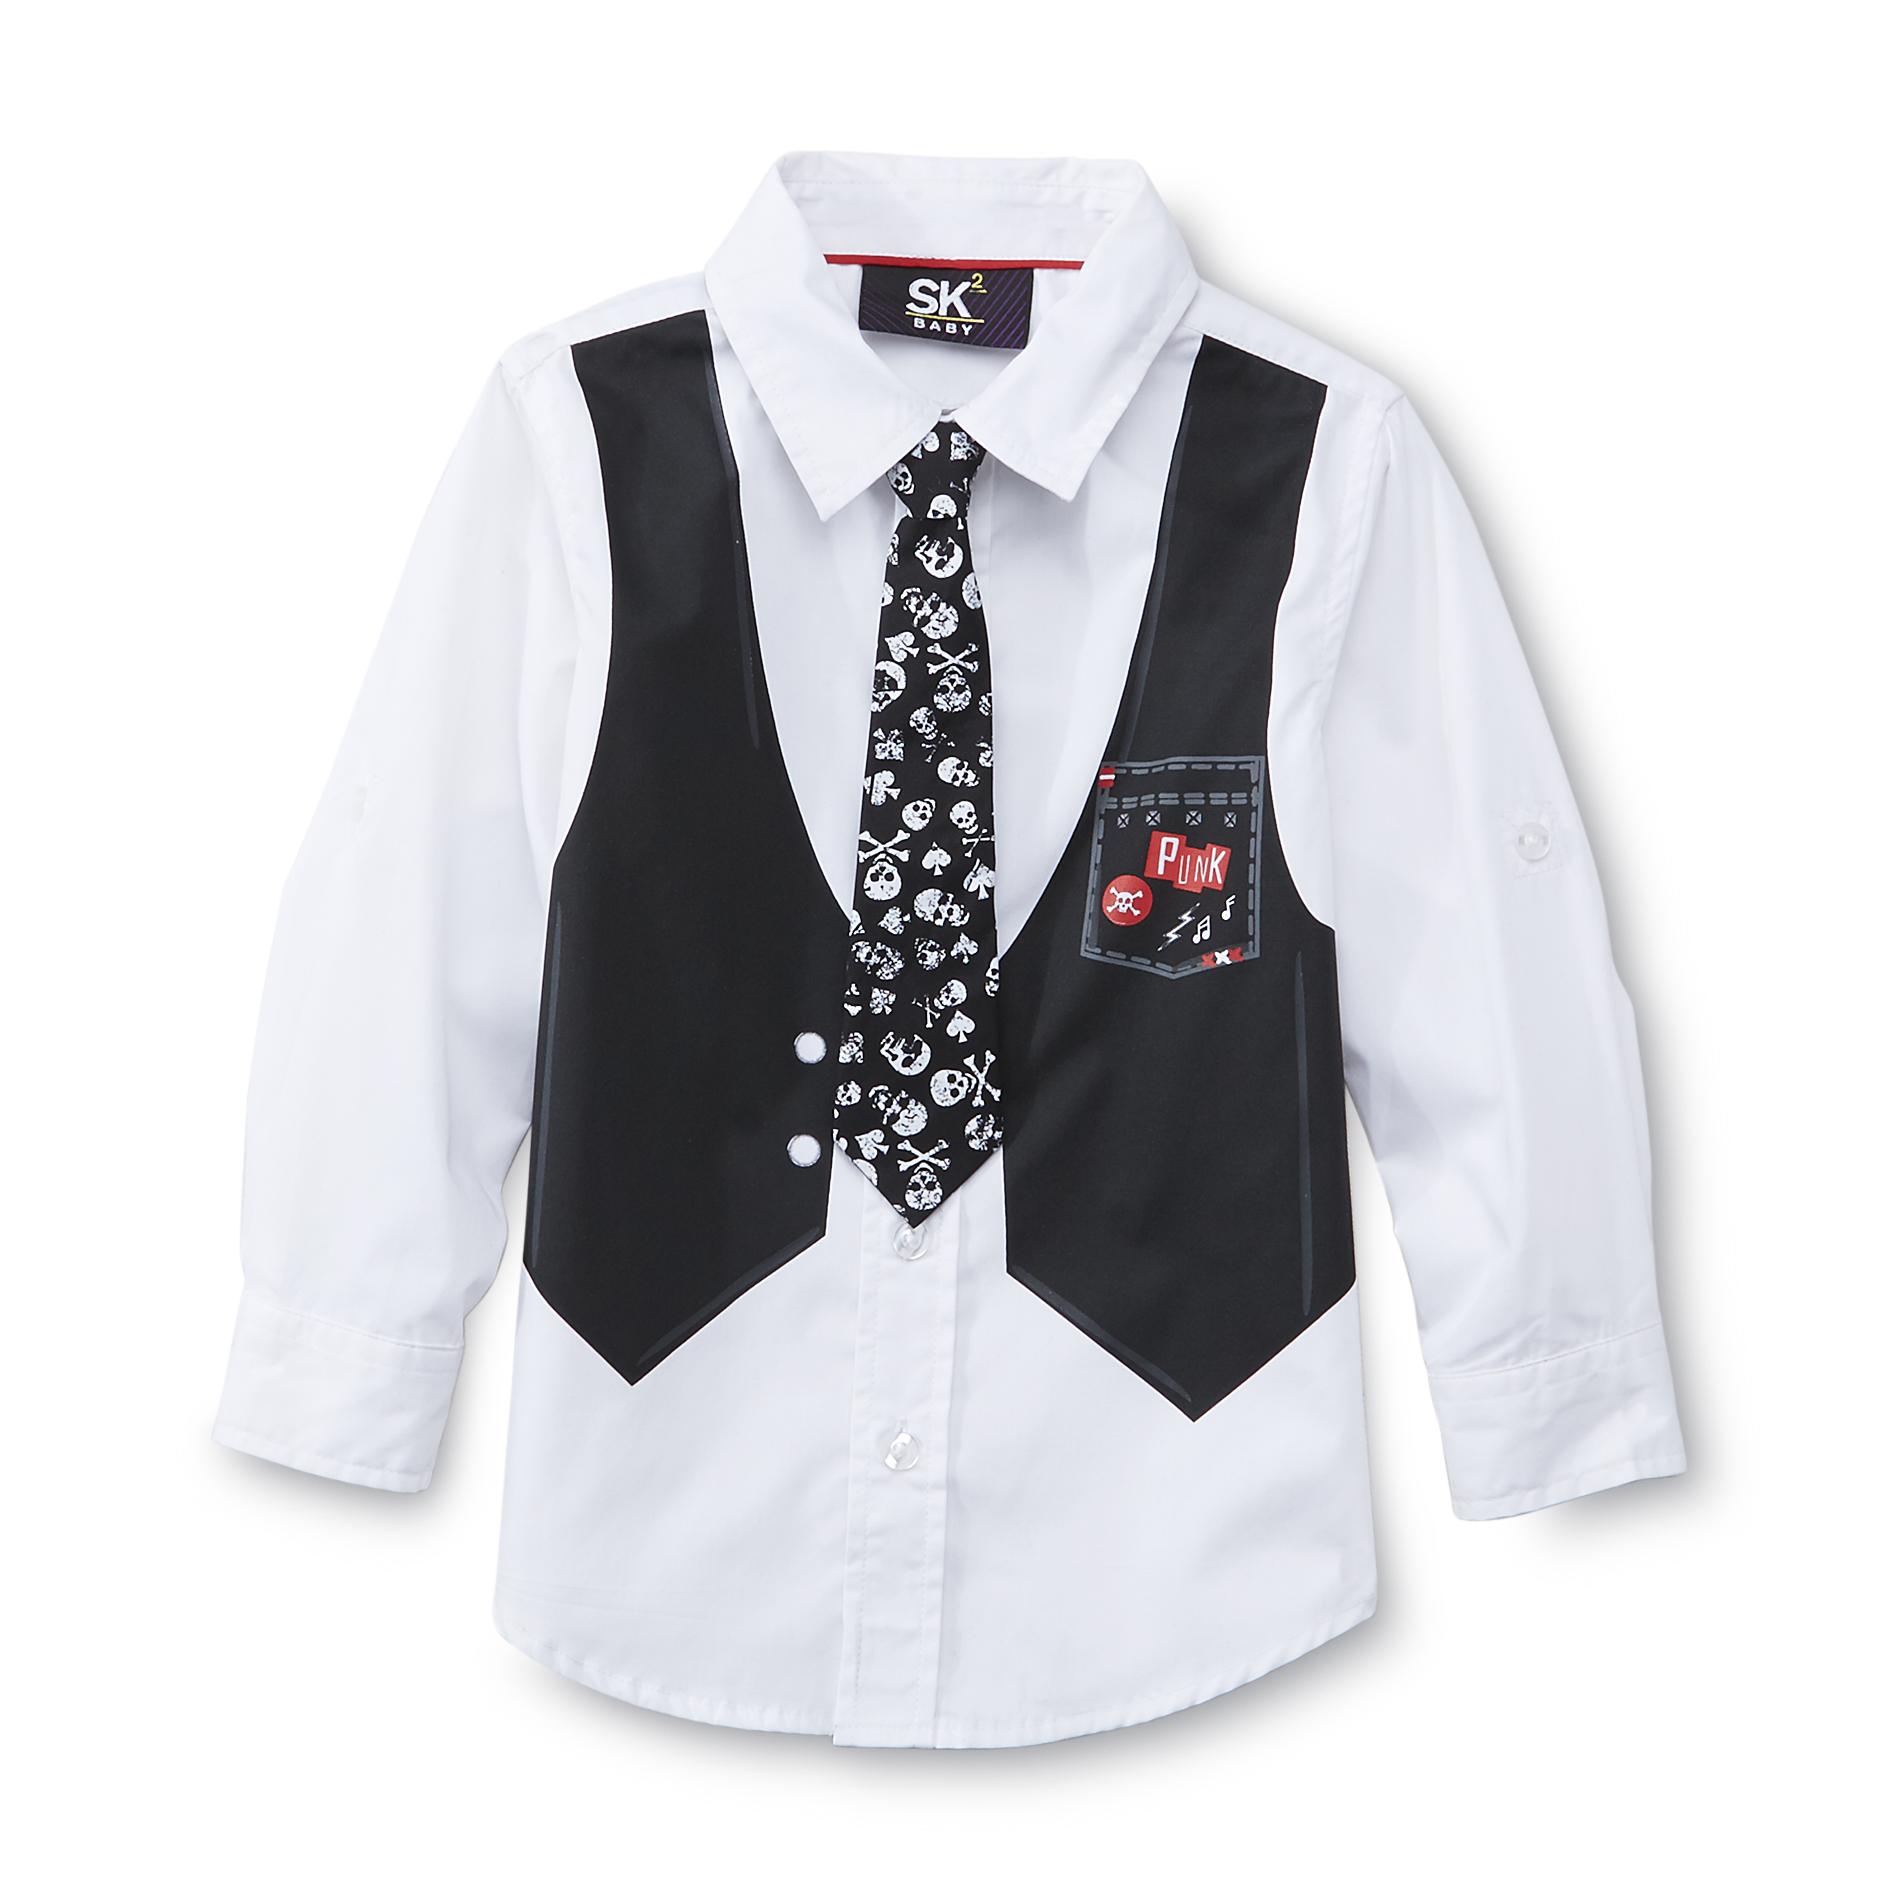 Sk2 Baby Toddler Boy's Printed Shirt & Necktie - Skulls